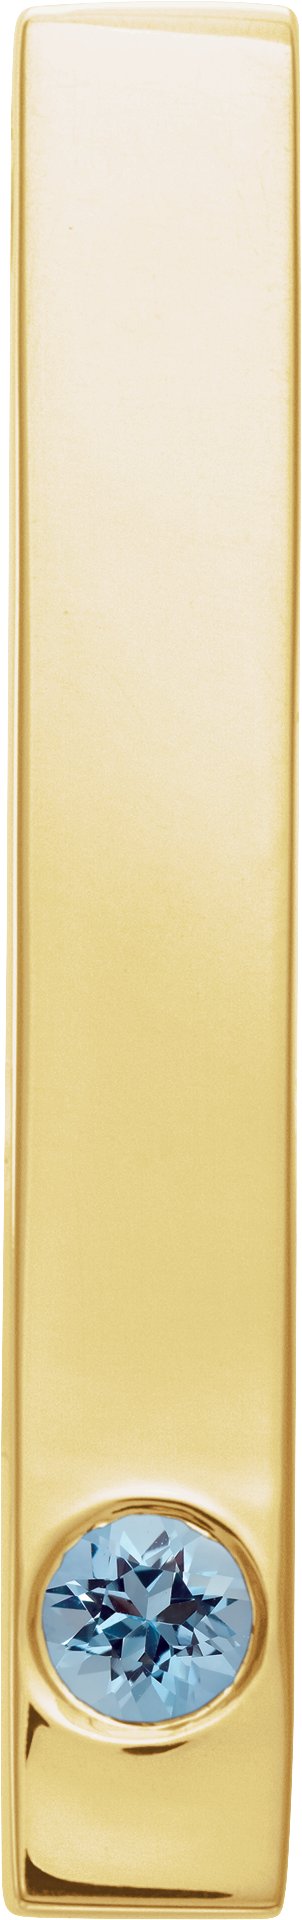 14K Yellow Aquamarine Family Engravable Bar Slide Pendant Ref. 16233250